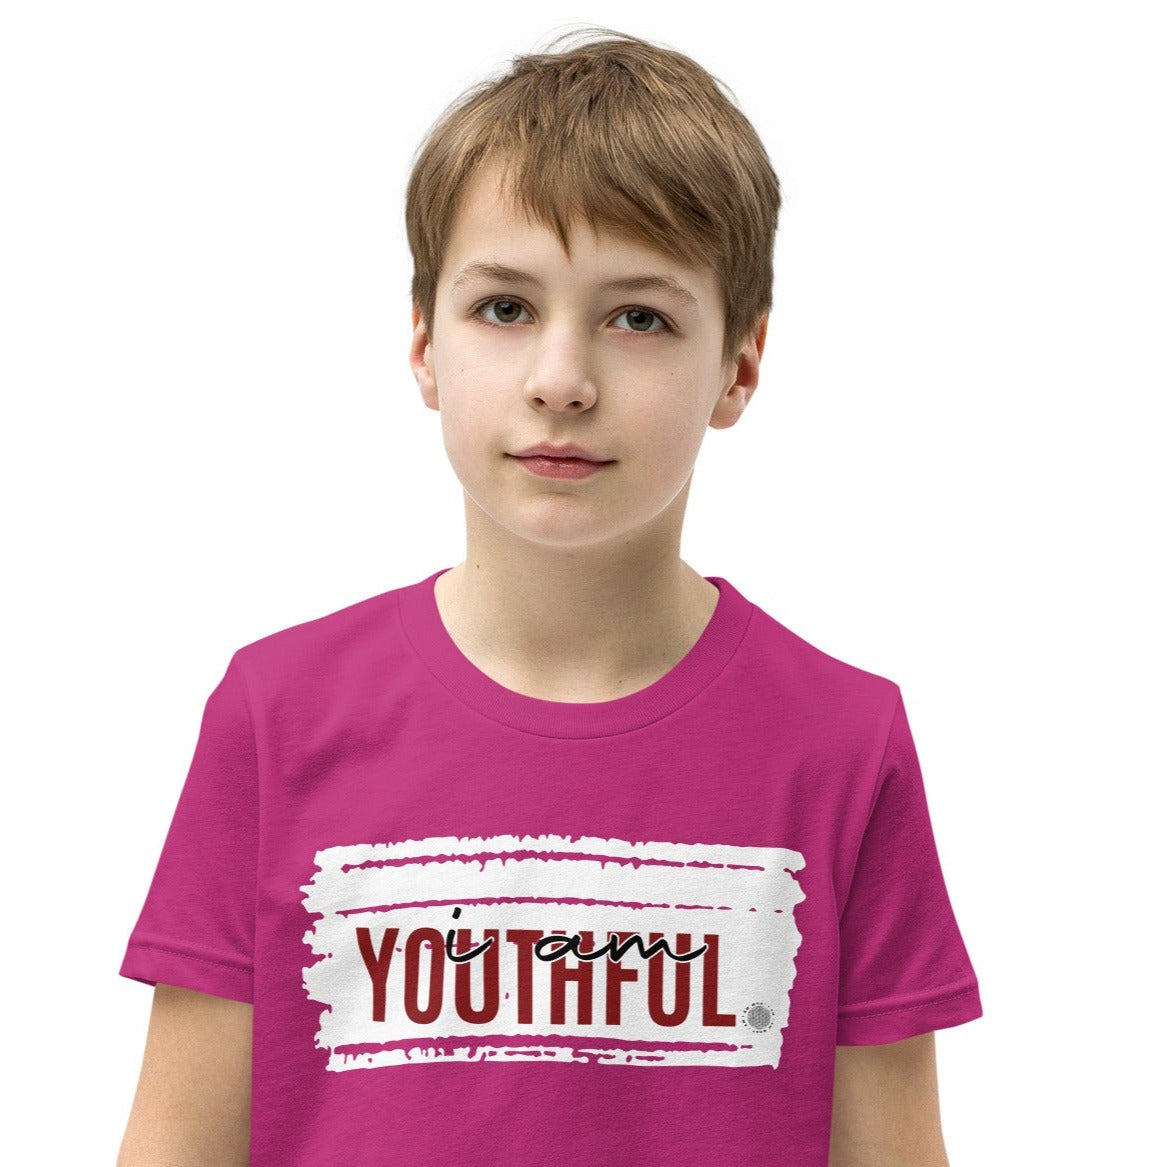 I Am Youthful Youth T-Shirt berry